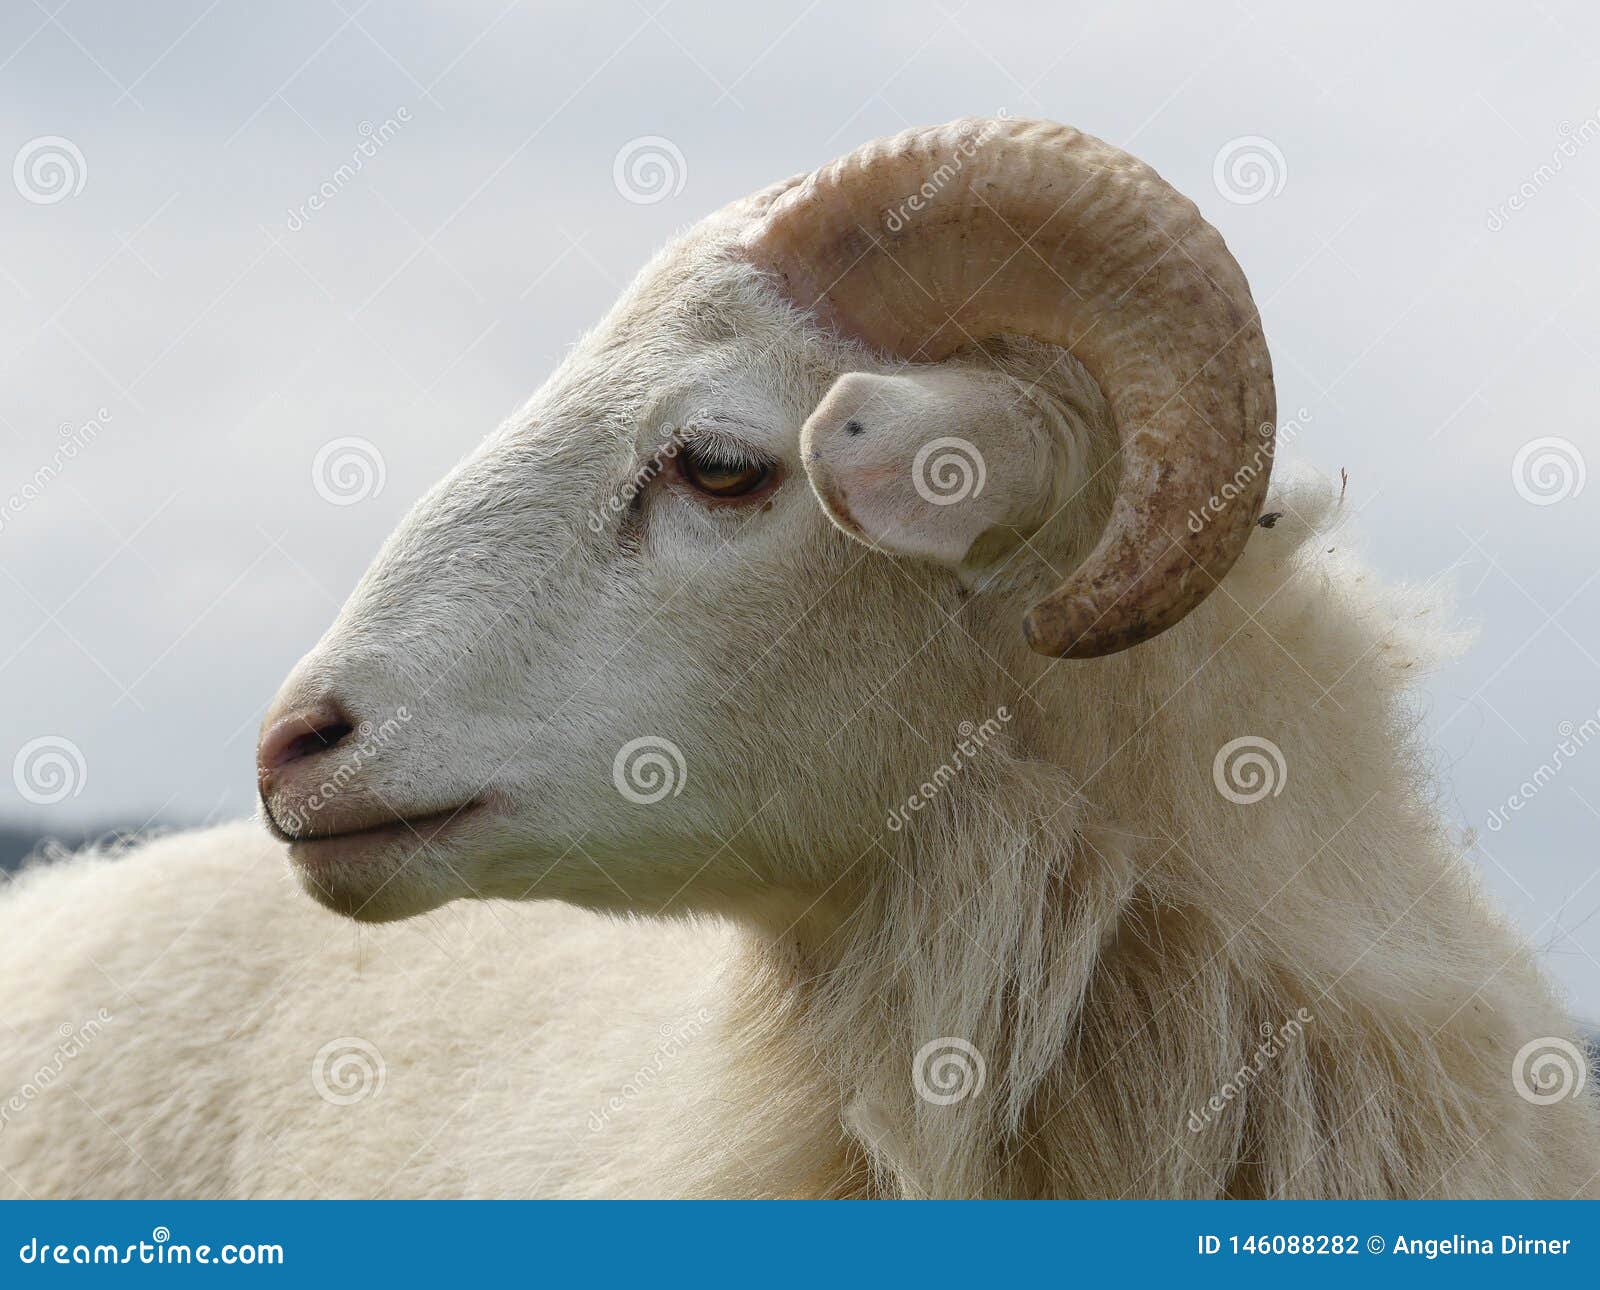 RAM Blanche De Moutons De Kamerun Photo stock - Image du ferme, cheveu:  146088282